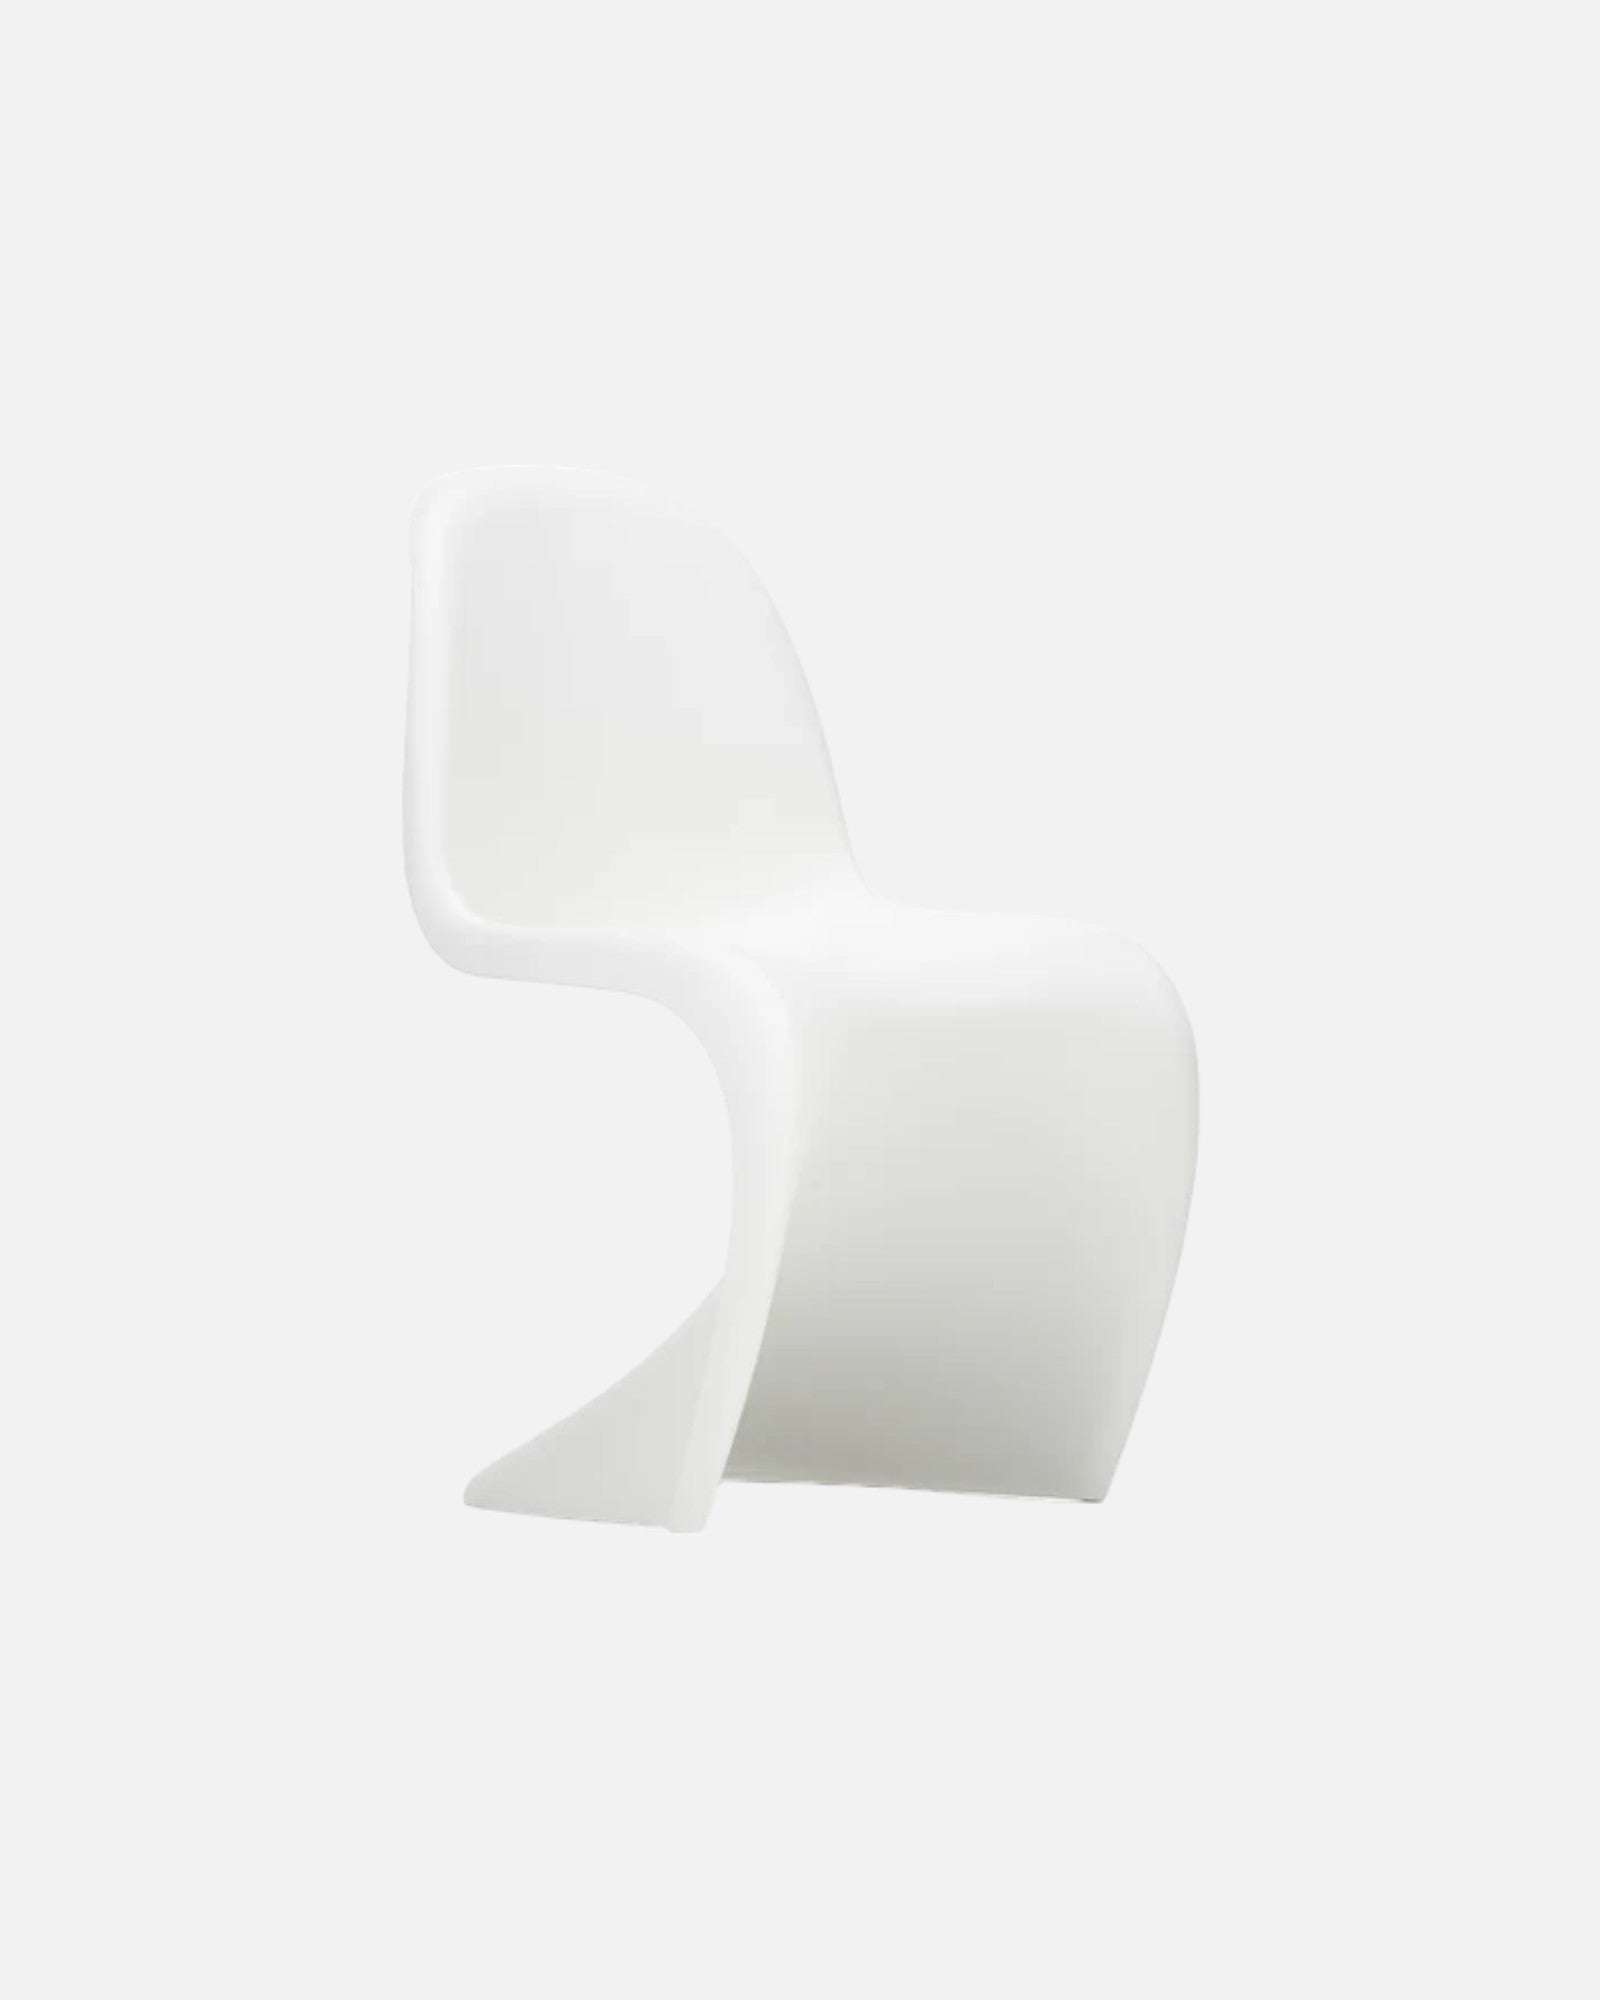 Wave Chair - ModAura Designs